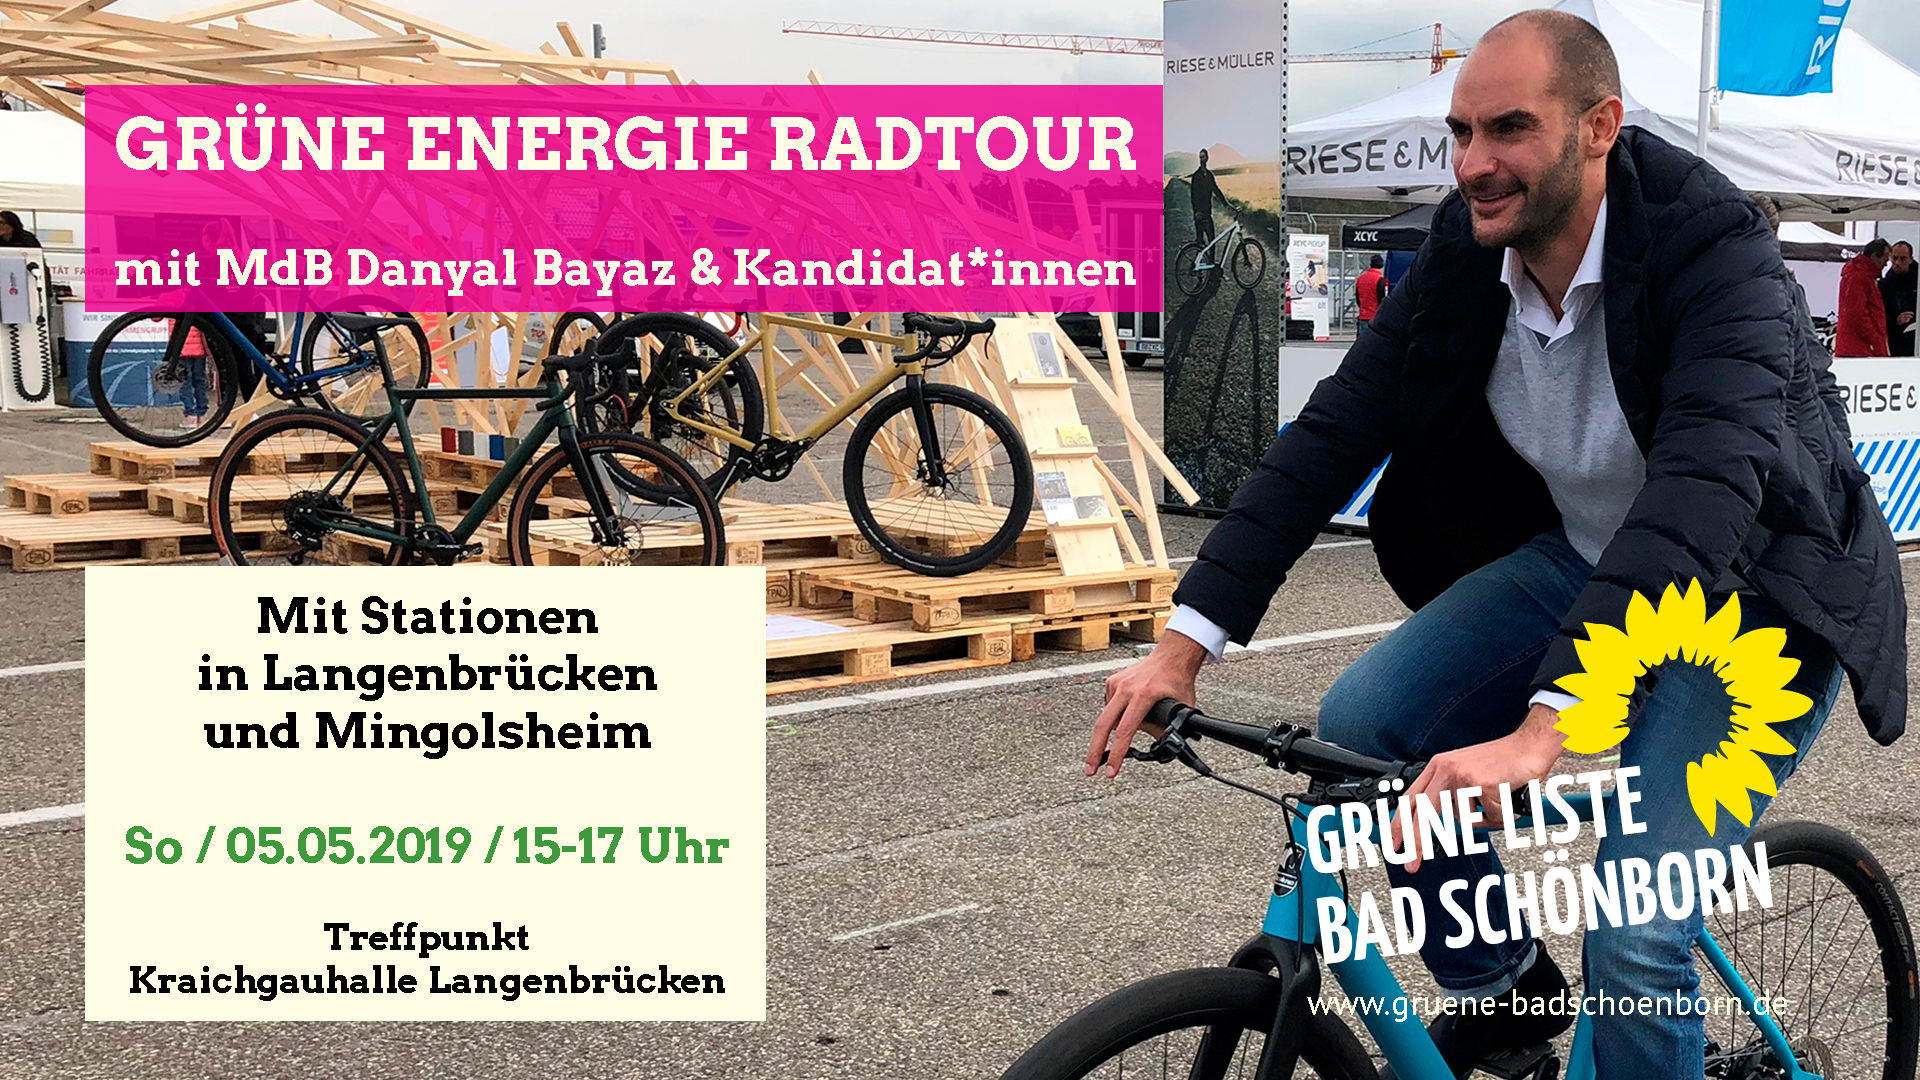 Grüne Energie Radtour mit MdB Danyal Bayaz am 5. Mai 2019